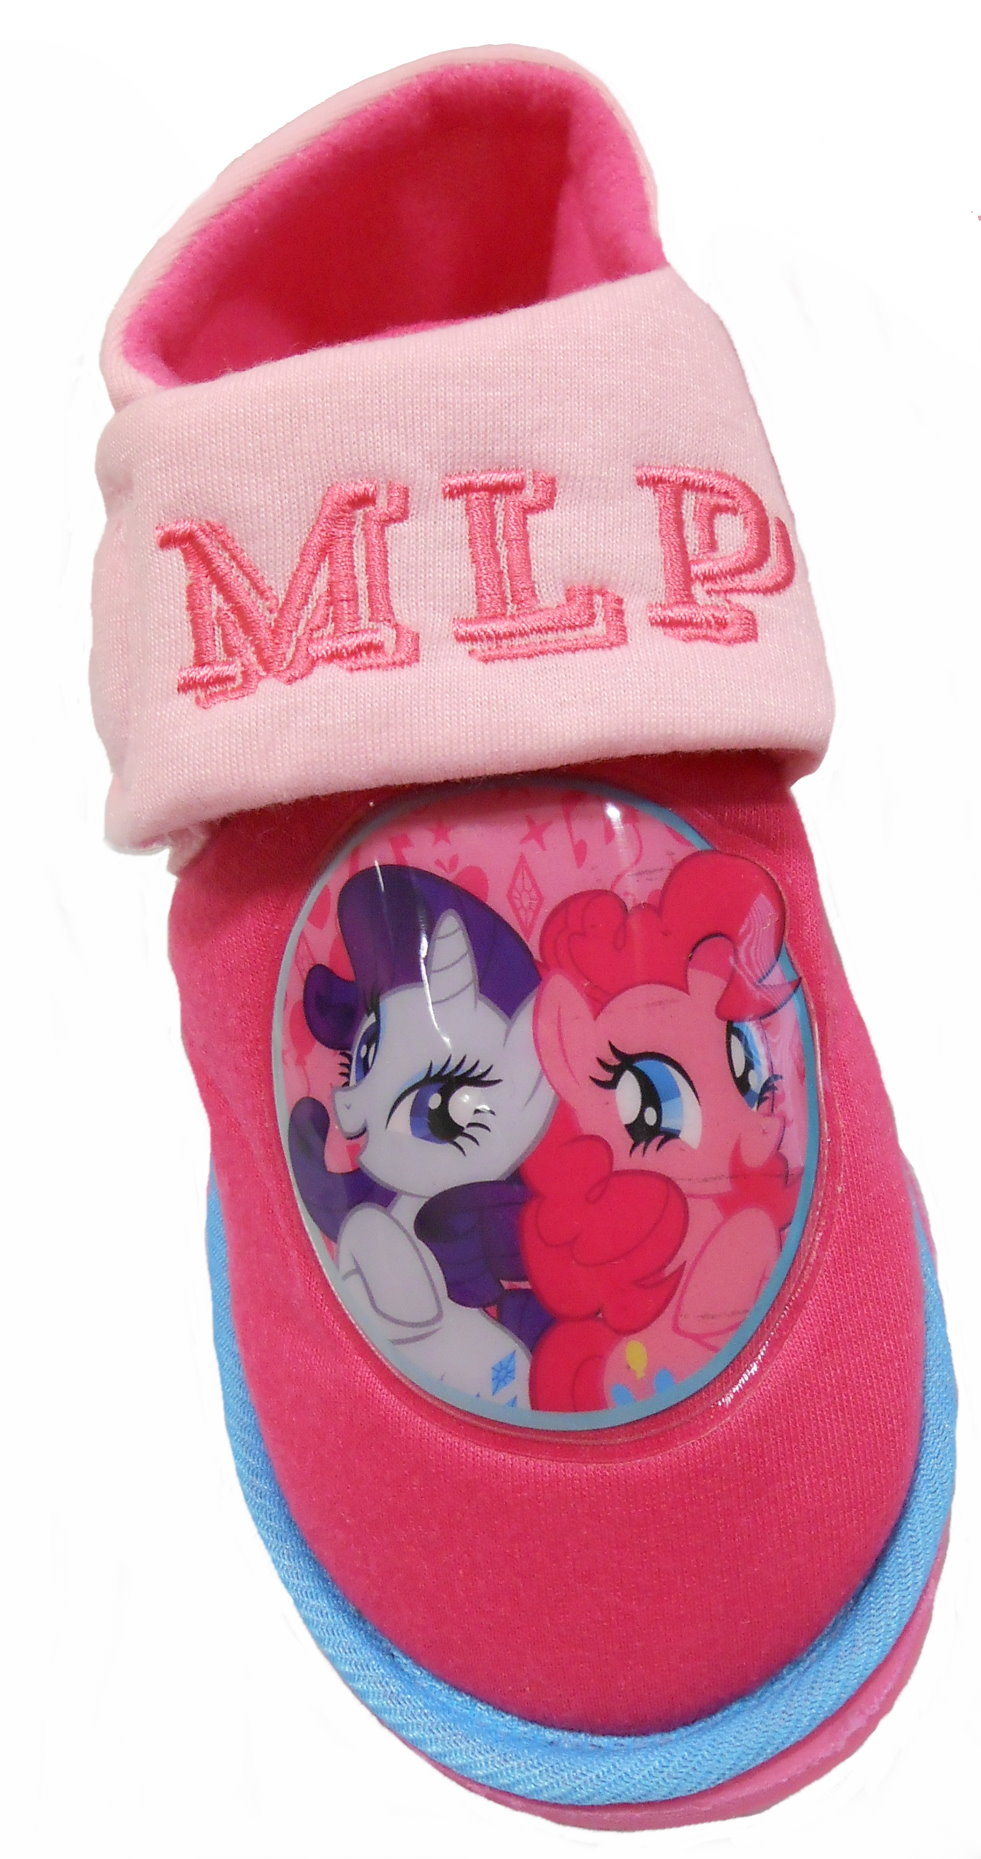 My Little Pony Slippers.JPG  by Thingimijigs